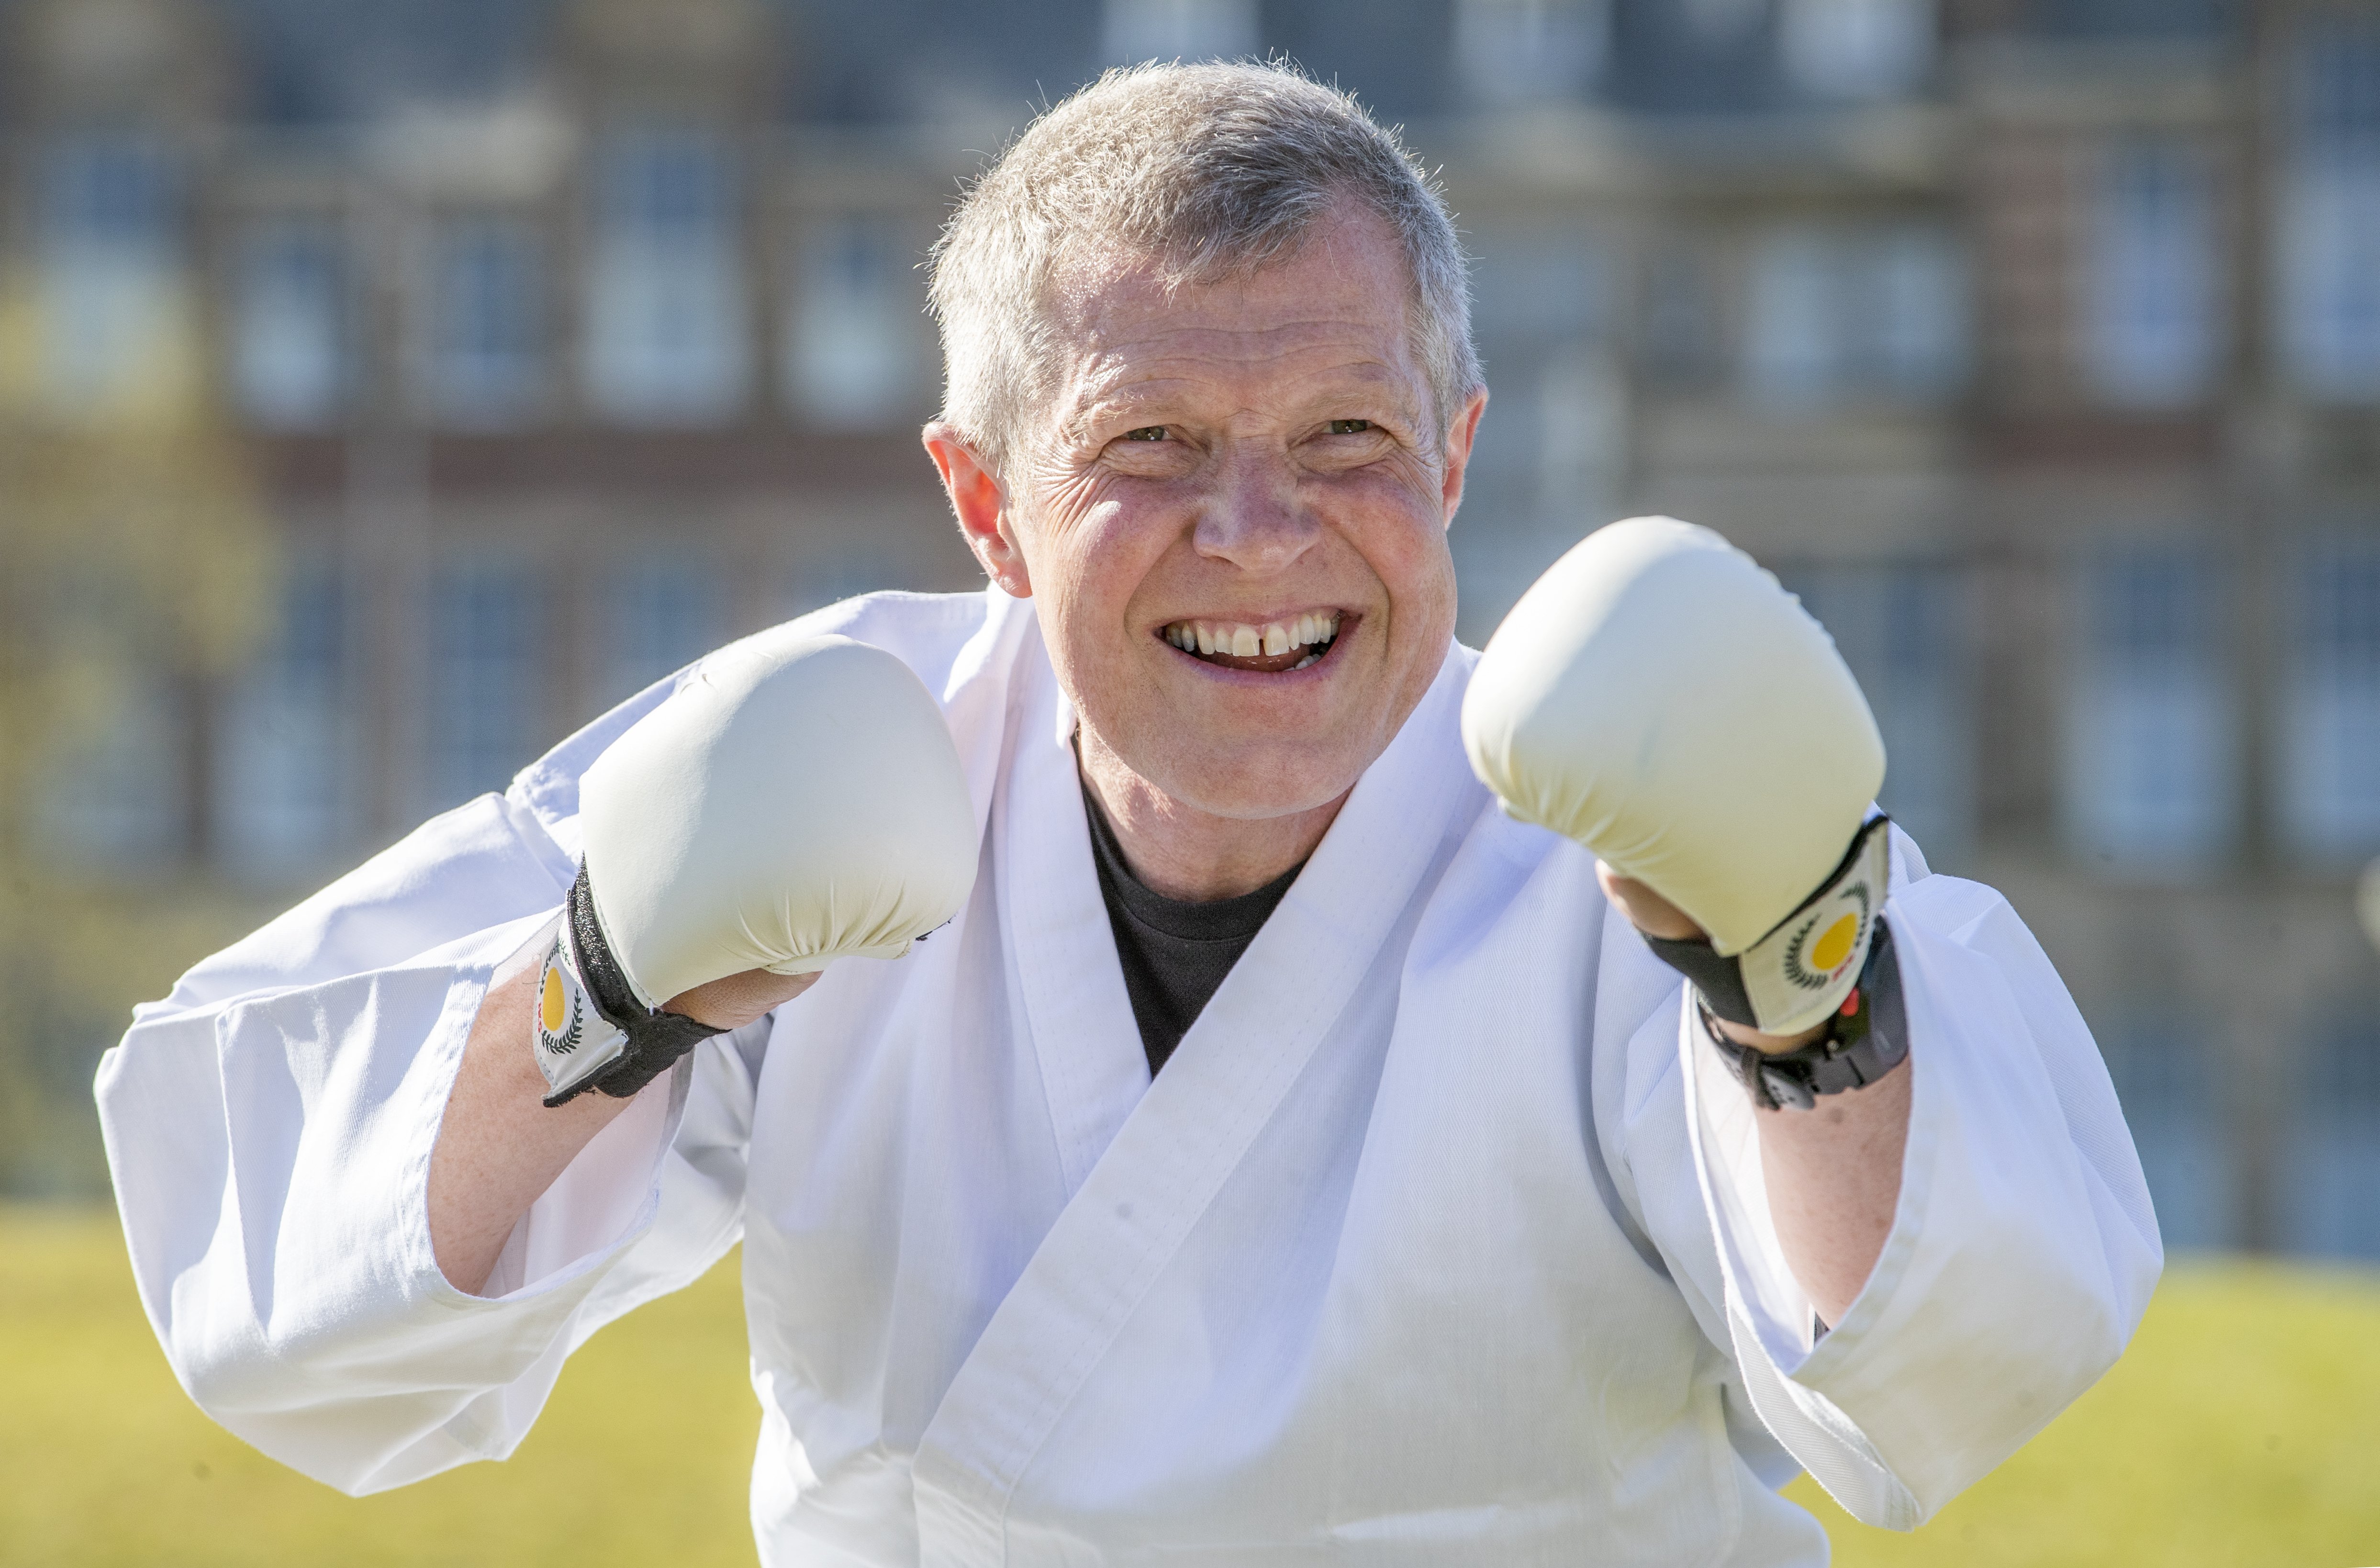 Scottish Lib Dem leader Willie Rennie optimistic ahead of Holyrood election